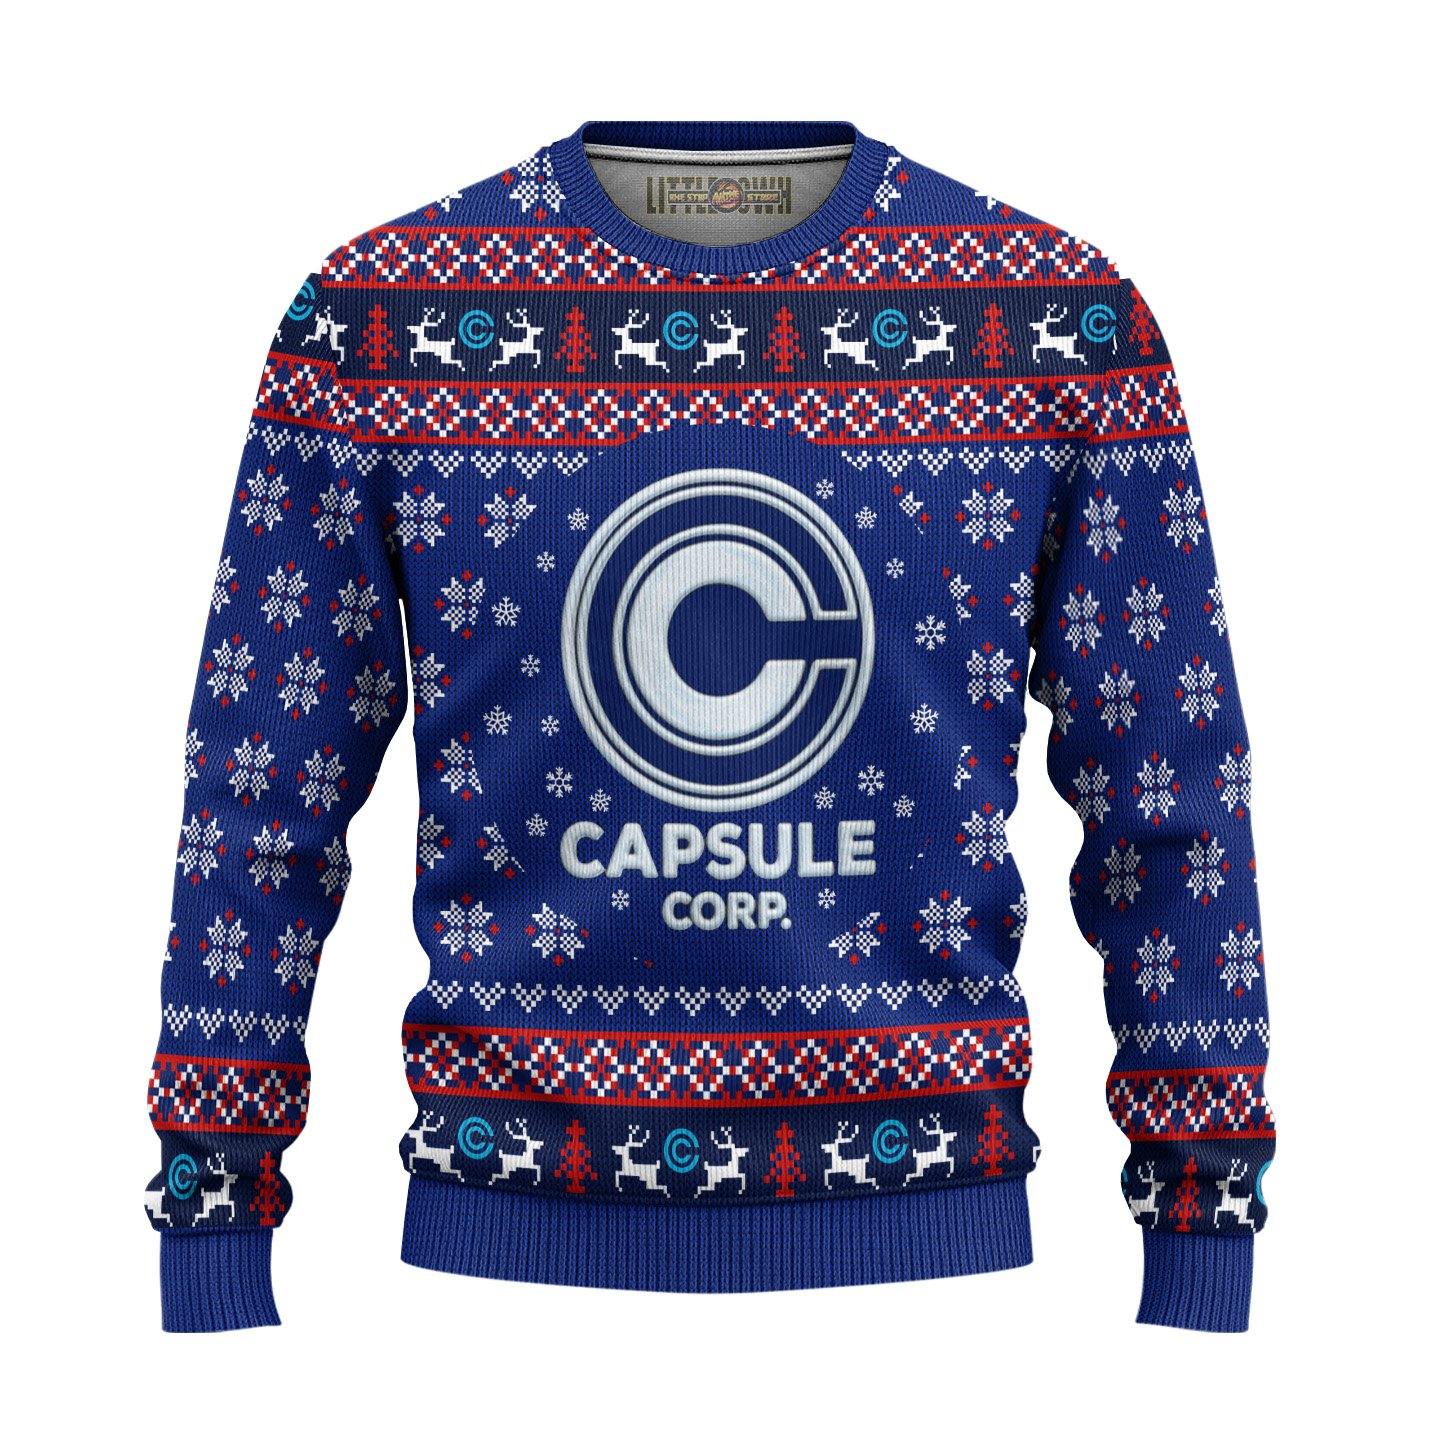 Capsule Corp Ugly Christmas Sweater Dragon Ball Anime New Design